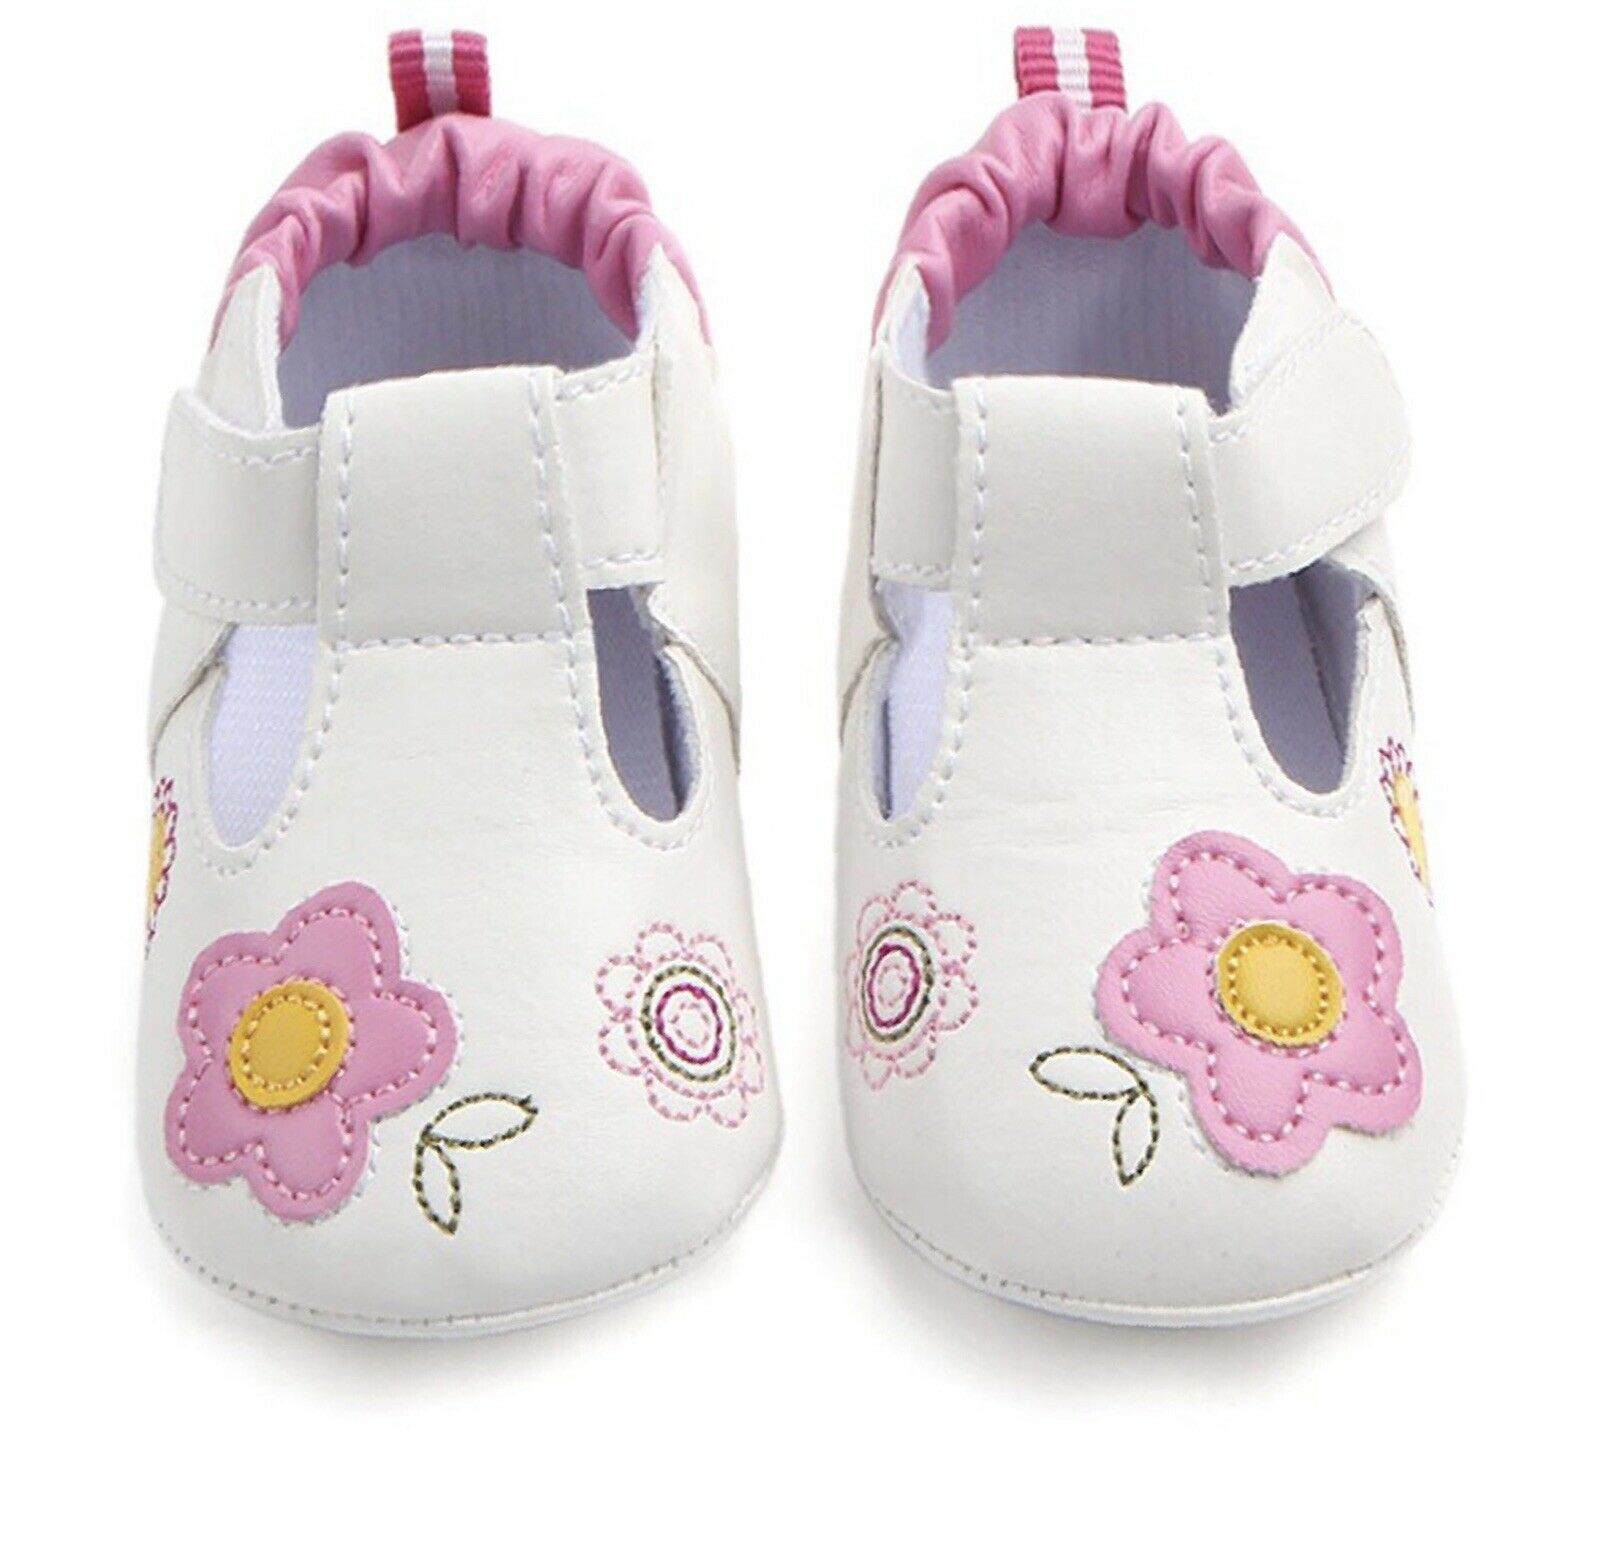 ENARI Baby Girl Shoes 12-18 Months Non Slip Sole Walking Shoes